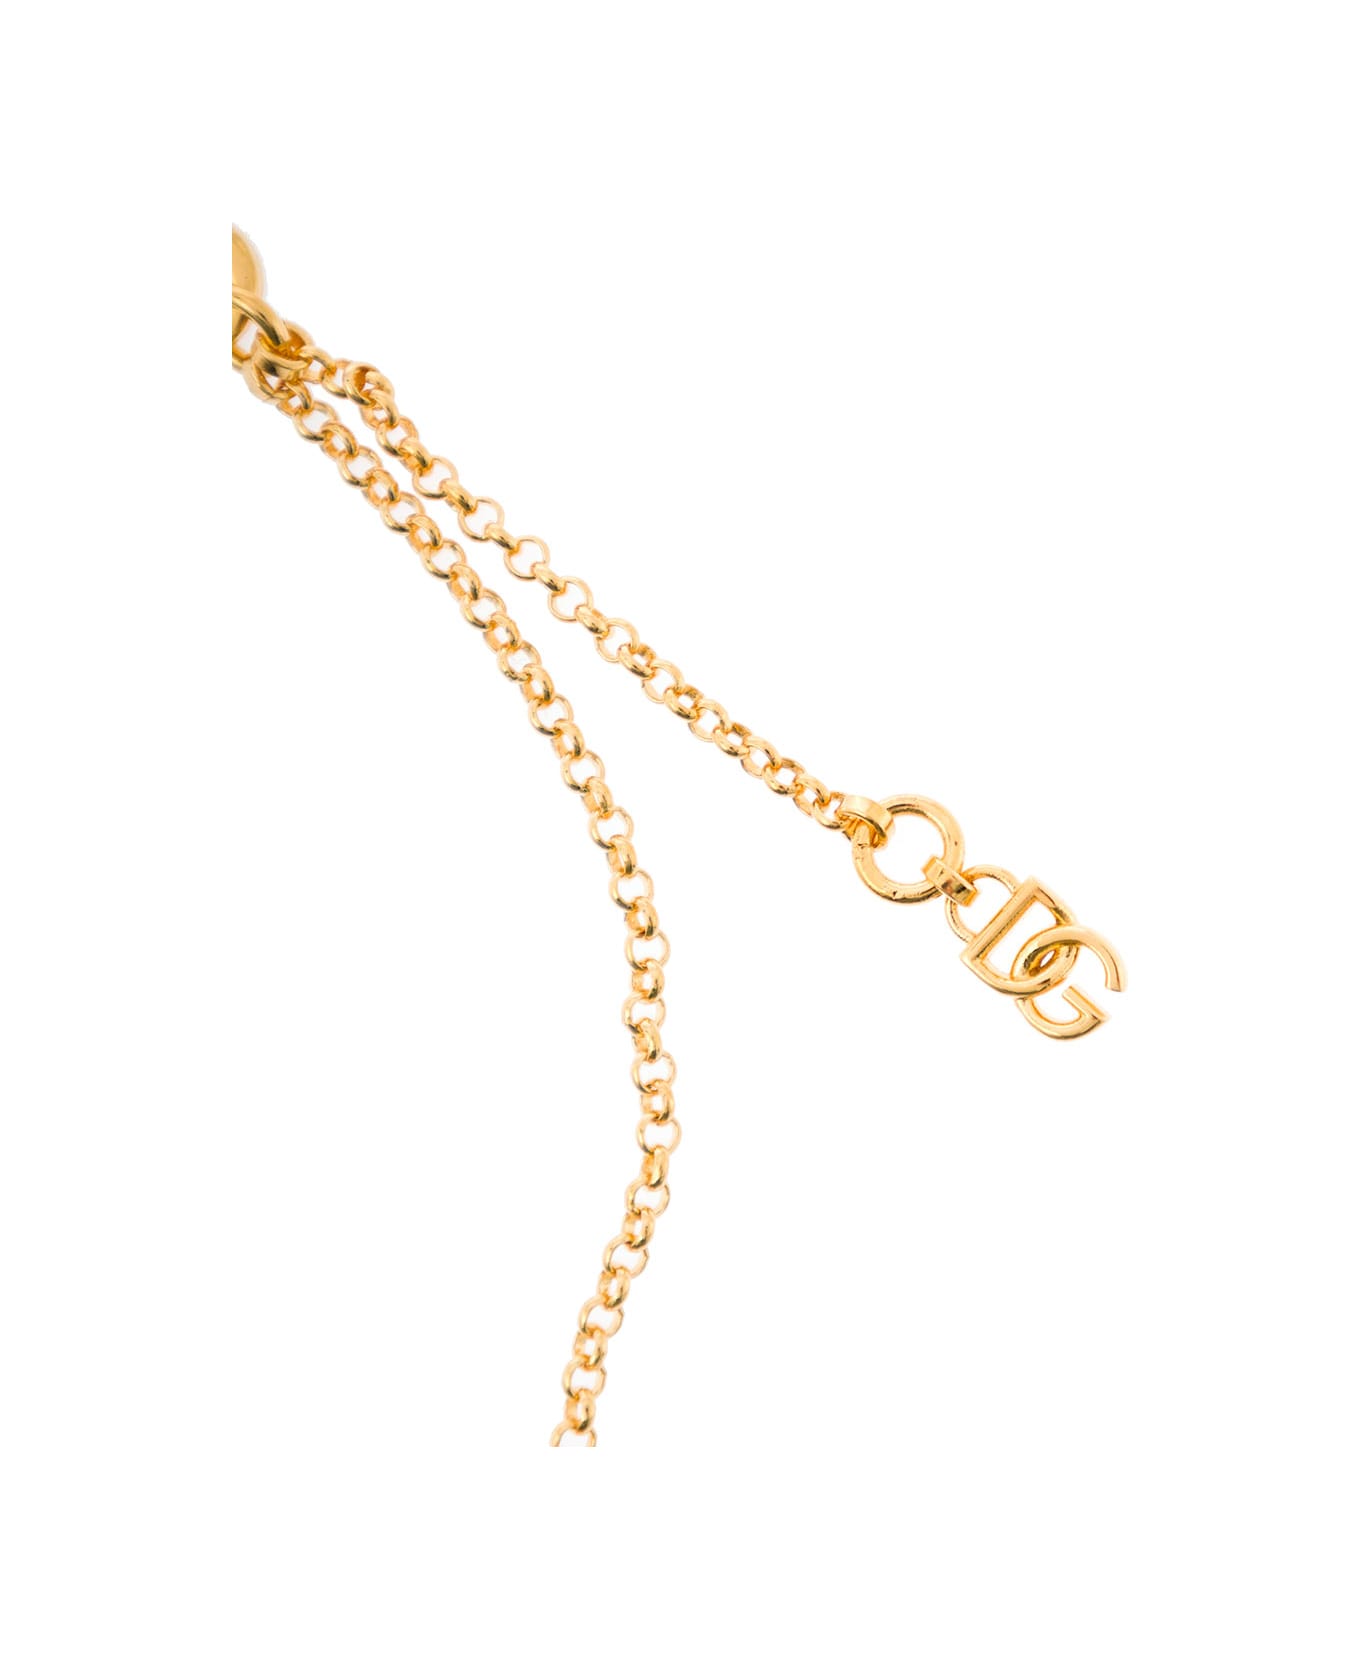 Dolce Einreihiges & Gabbana Cross Pendant Necklace - Metallic